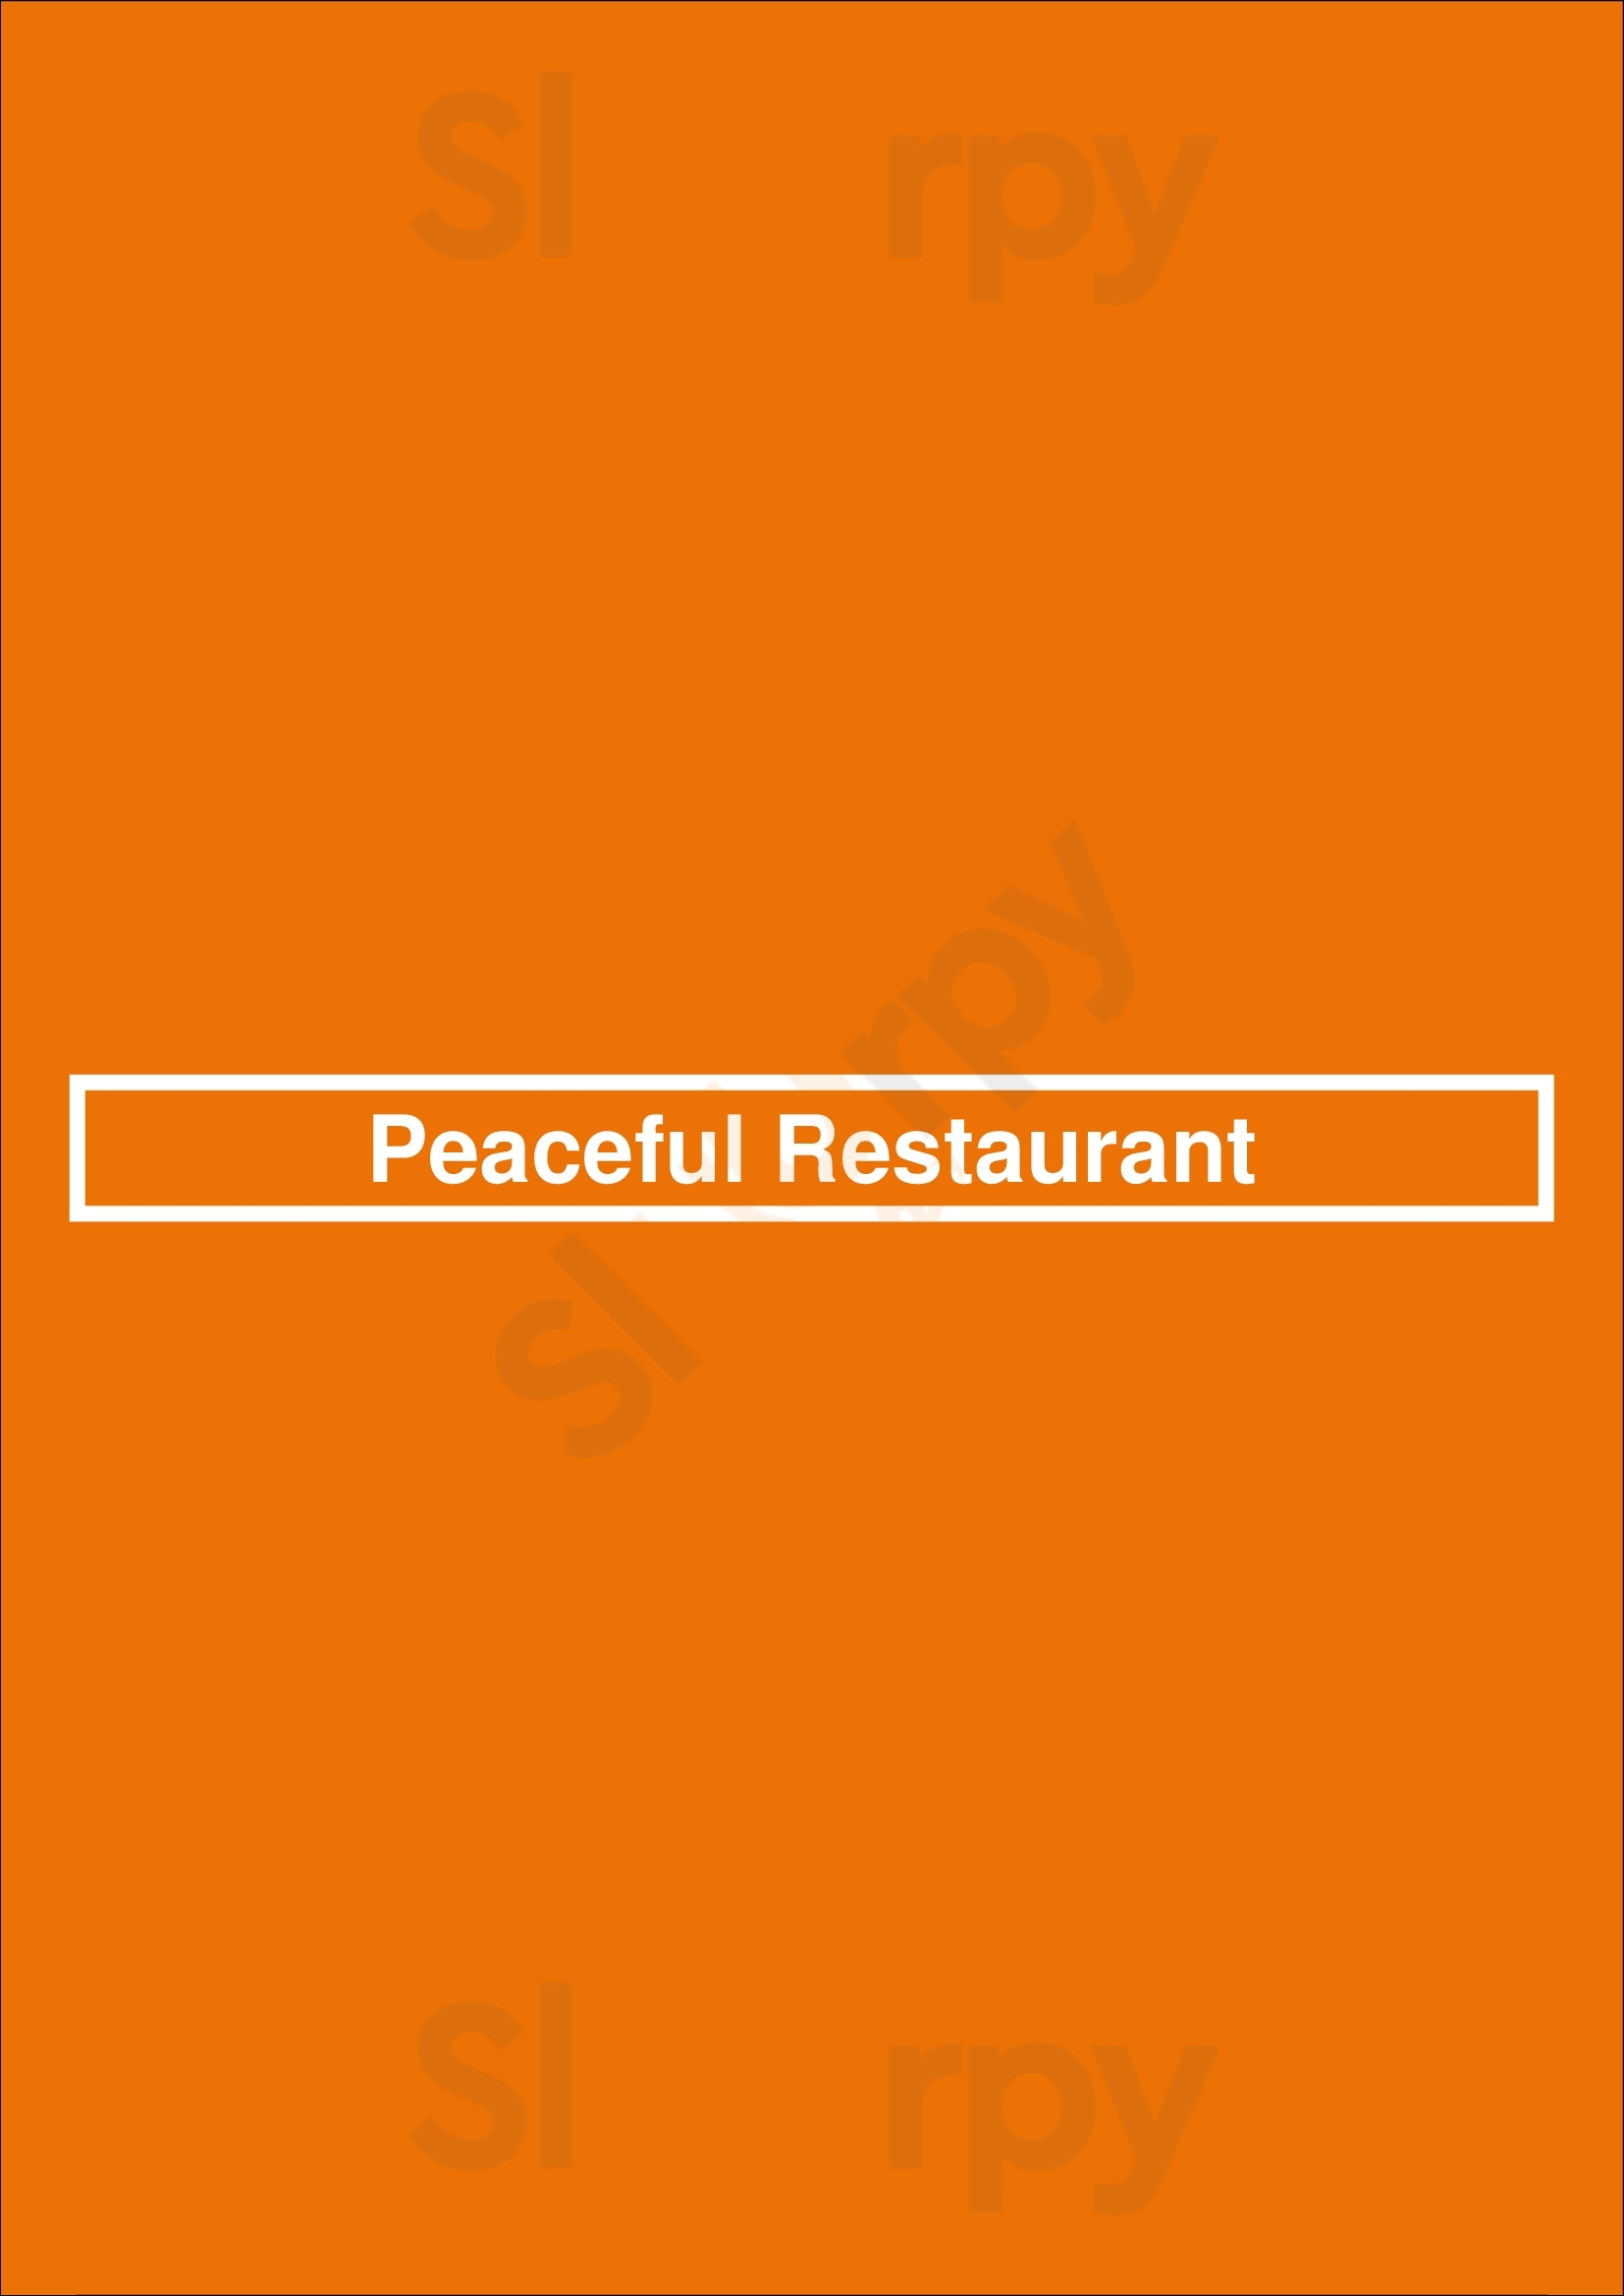 Peaceful Restaurant Vancouver Menu - 1